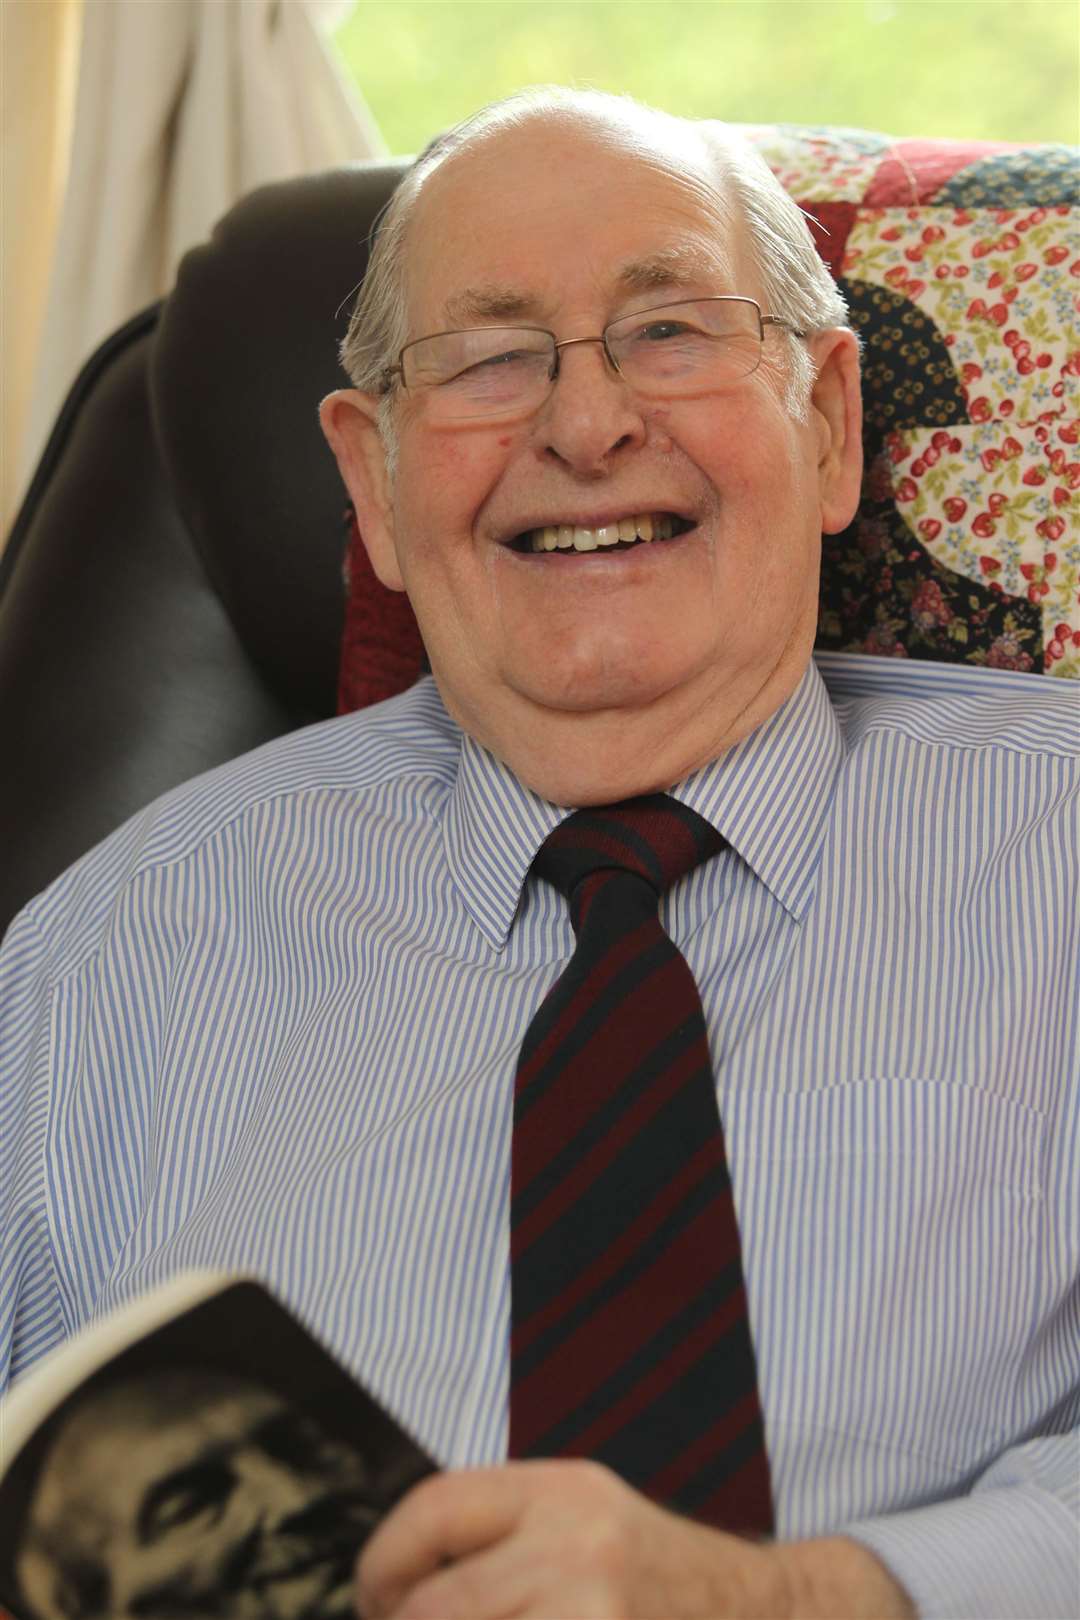 Former councillor Paul Harriott